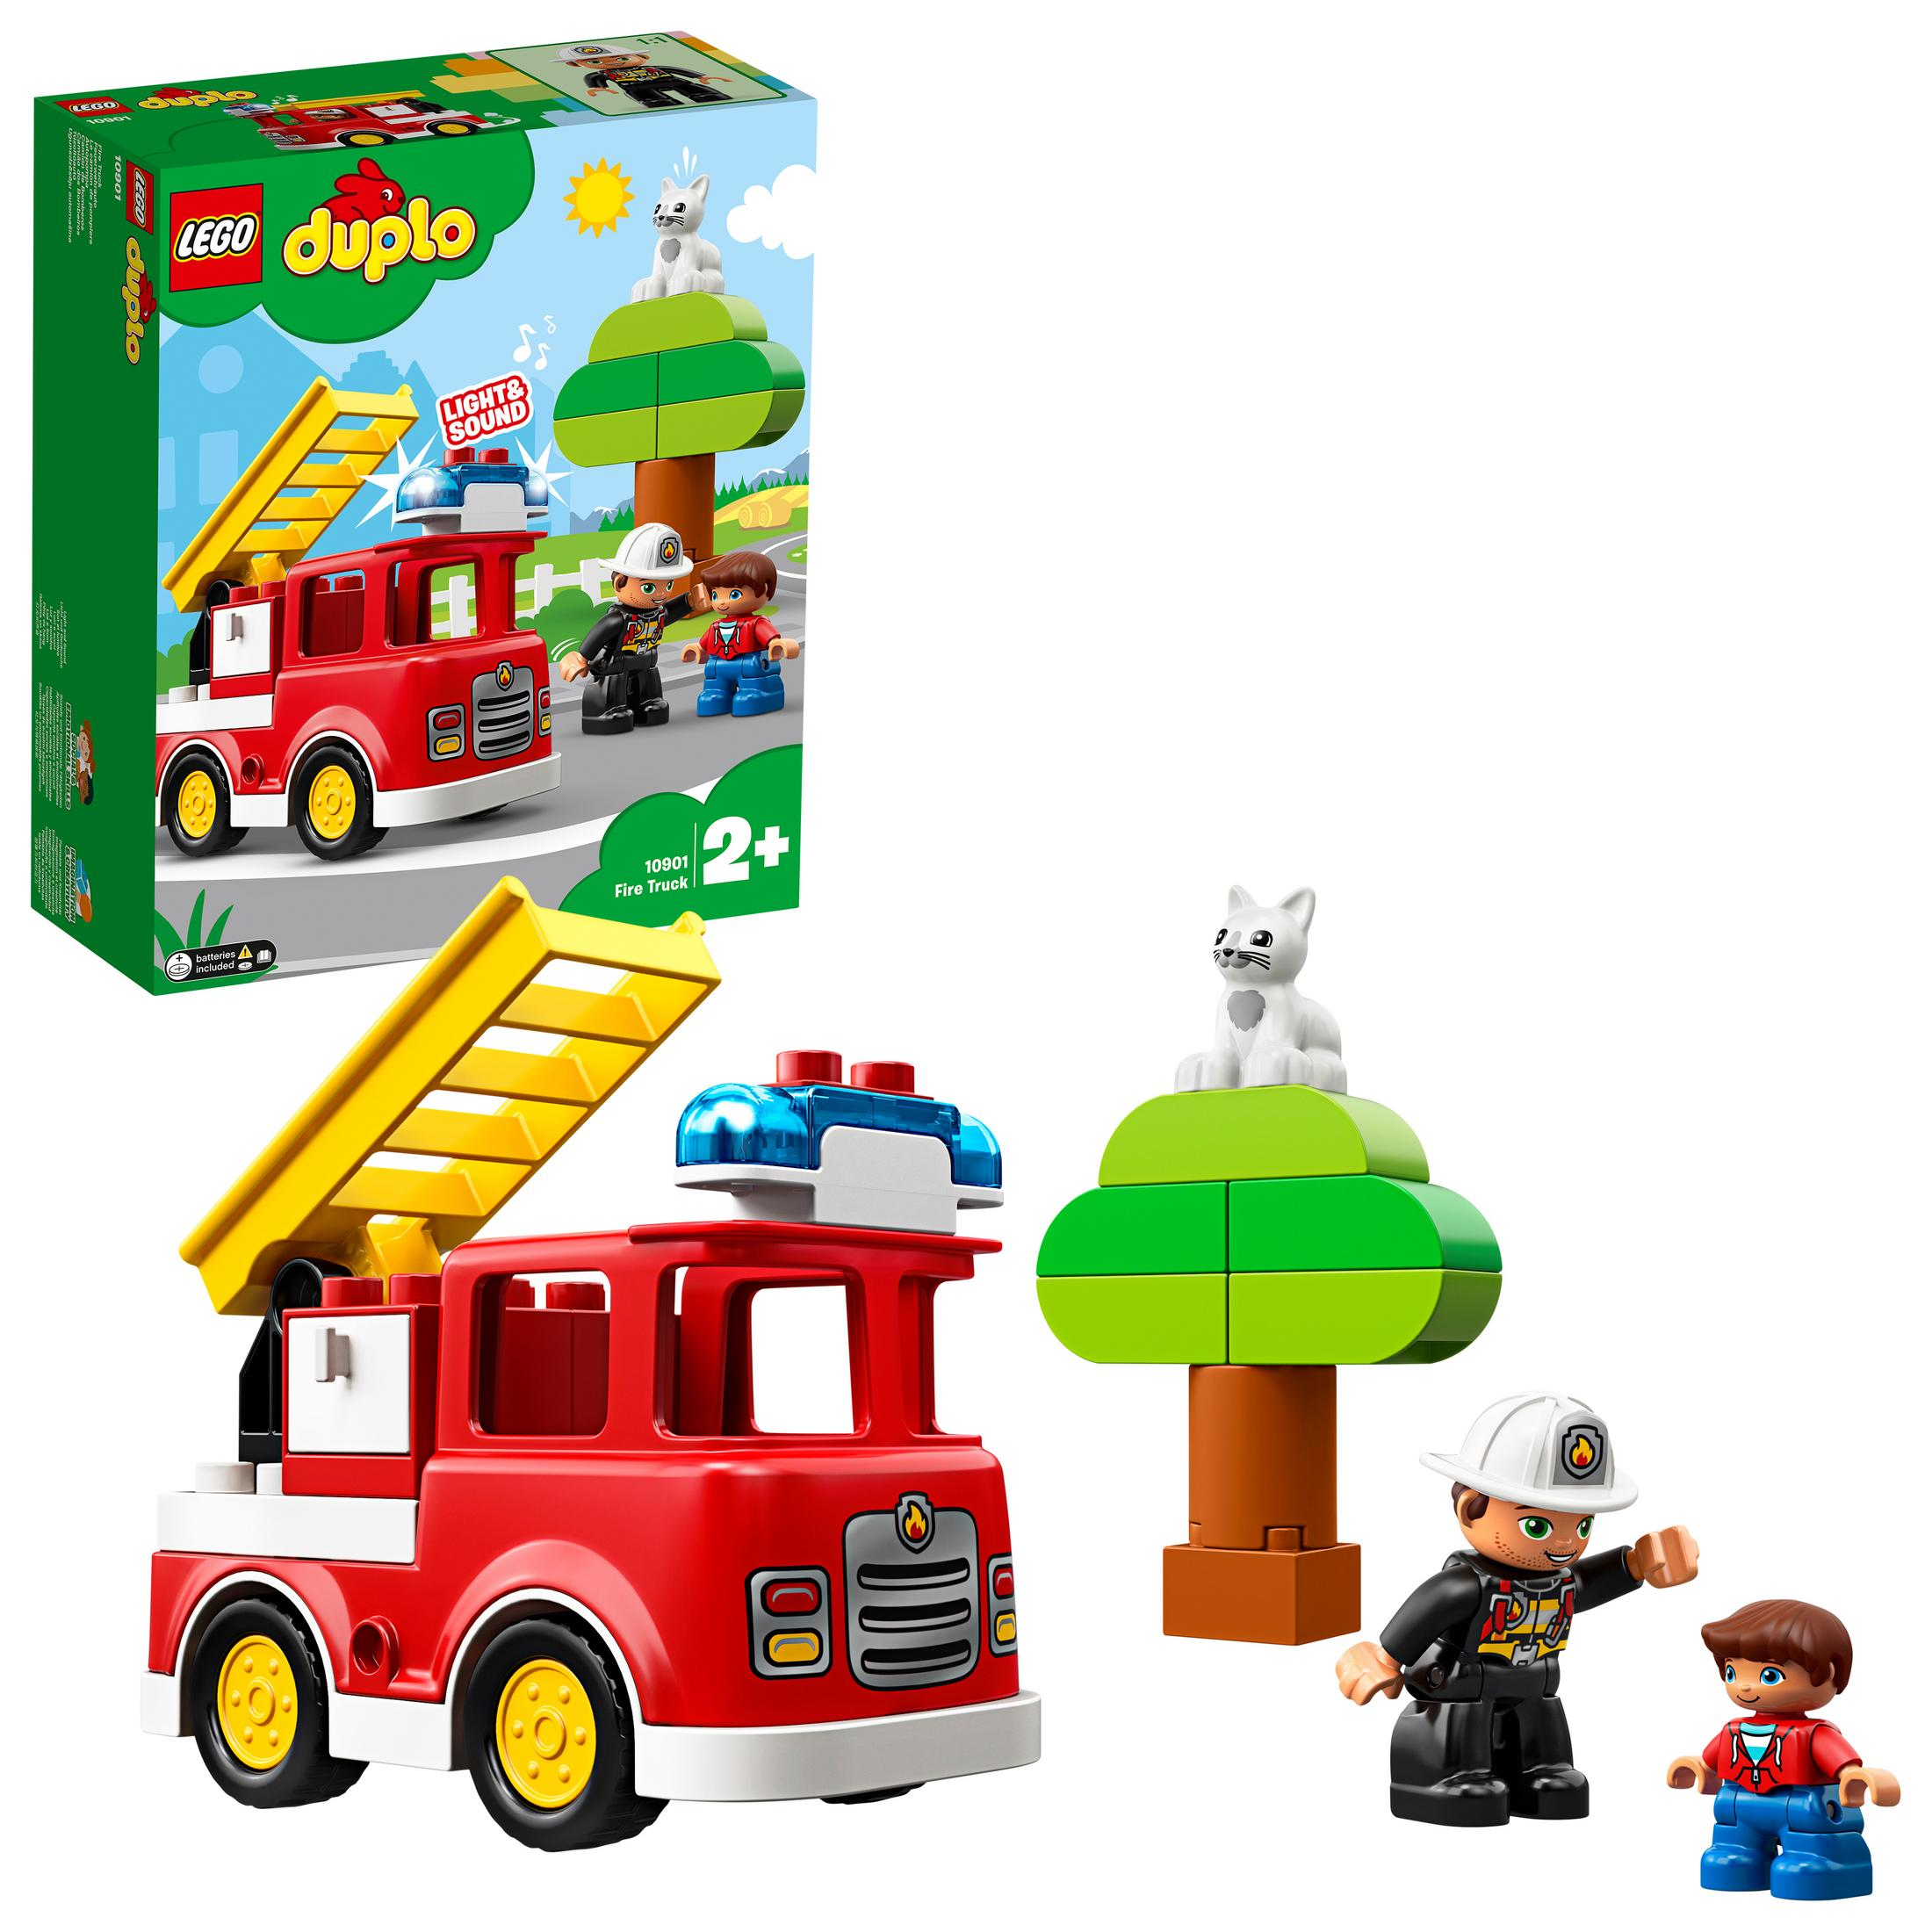 FEUERWEHRAUTO Bausatz, Mehrfarbig LEGO 10901